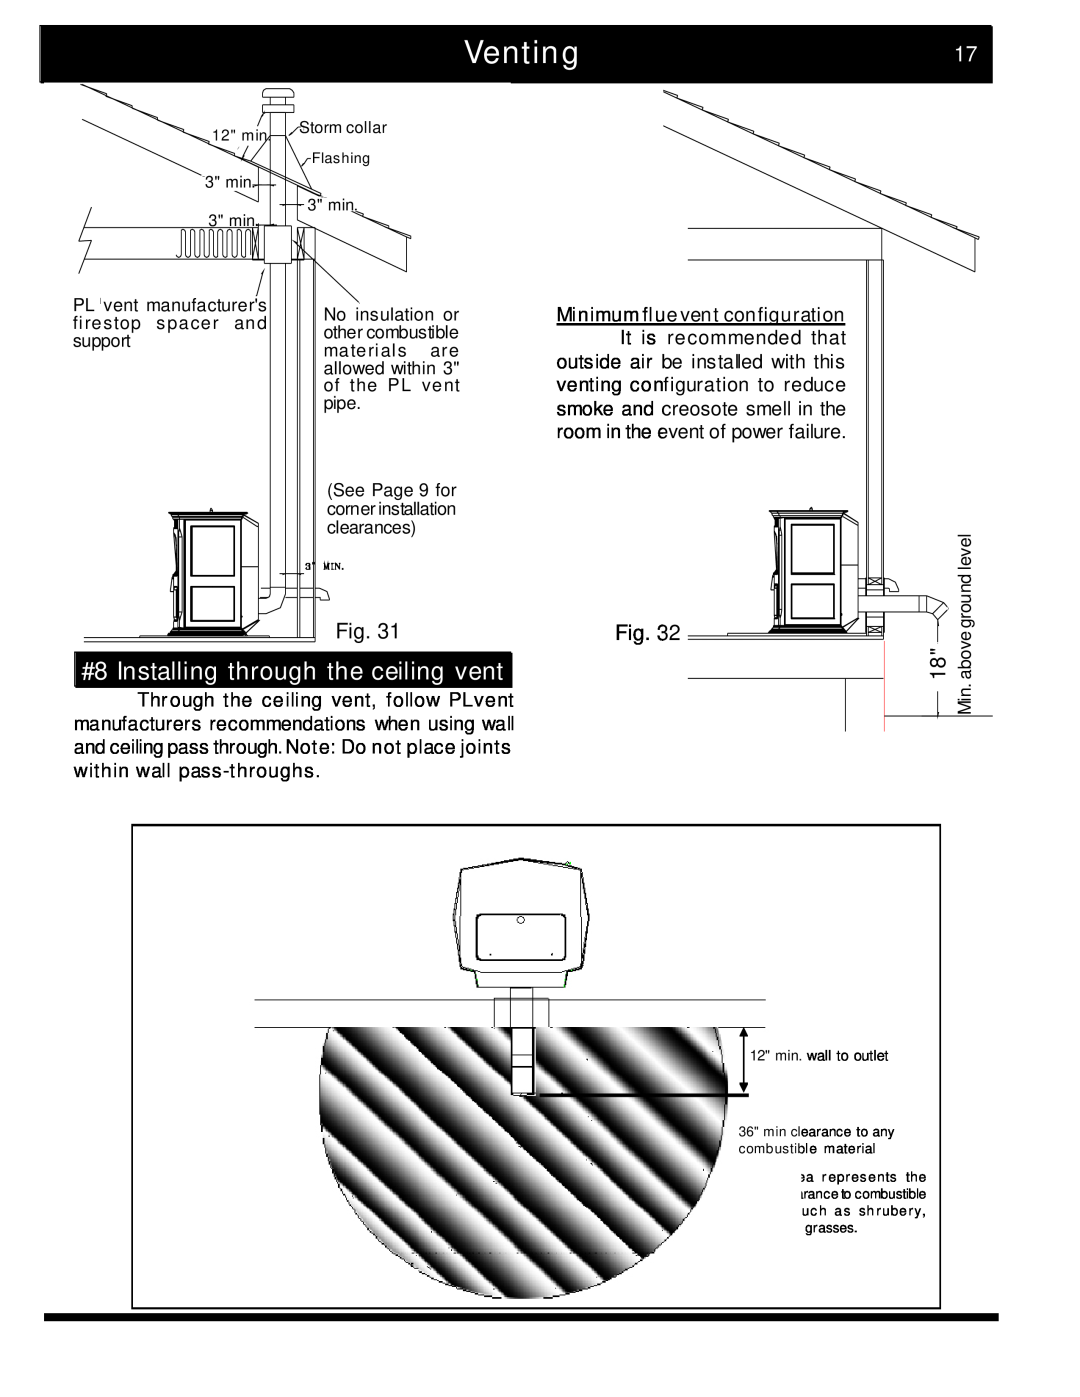 Harman Stove Company 2 manual Venting17, #8 Installing through the ceiling vent, Minimumflue vent configuration 